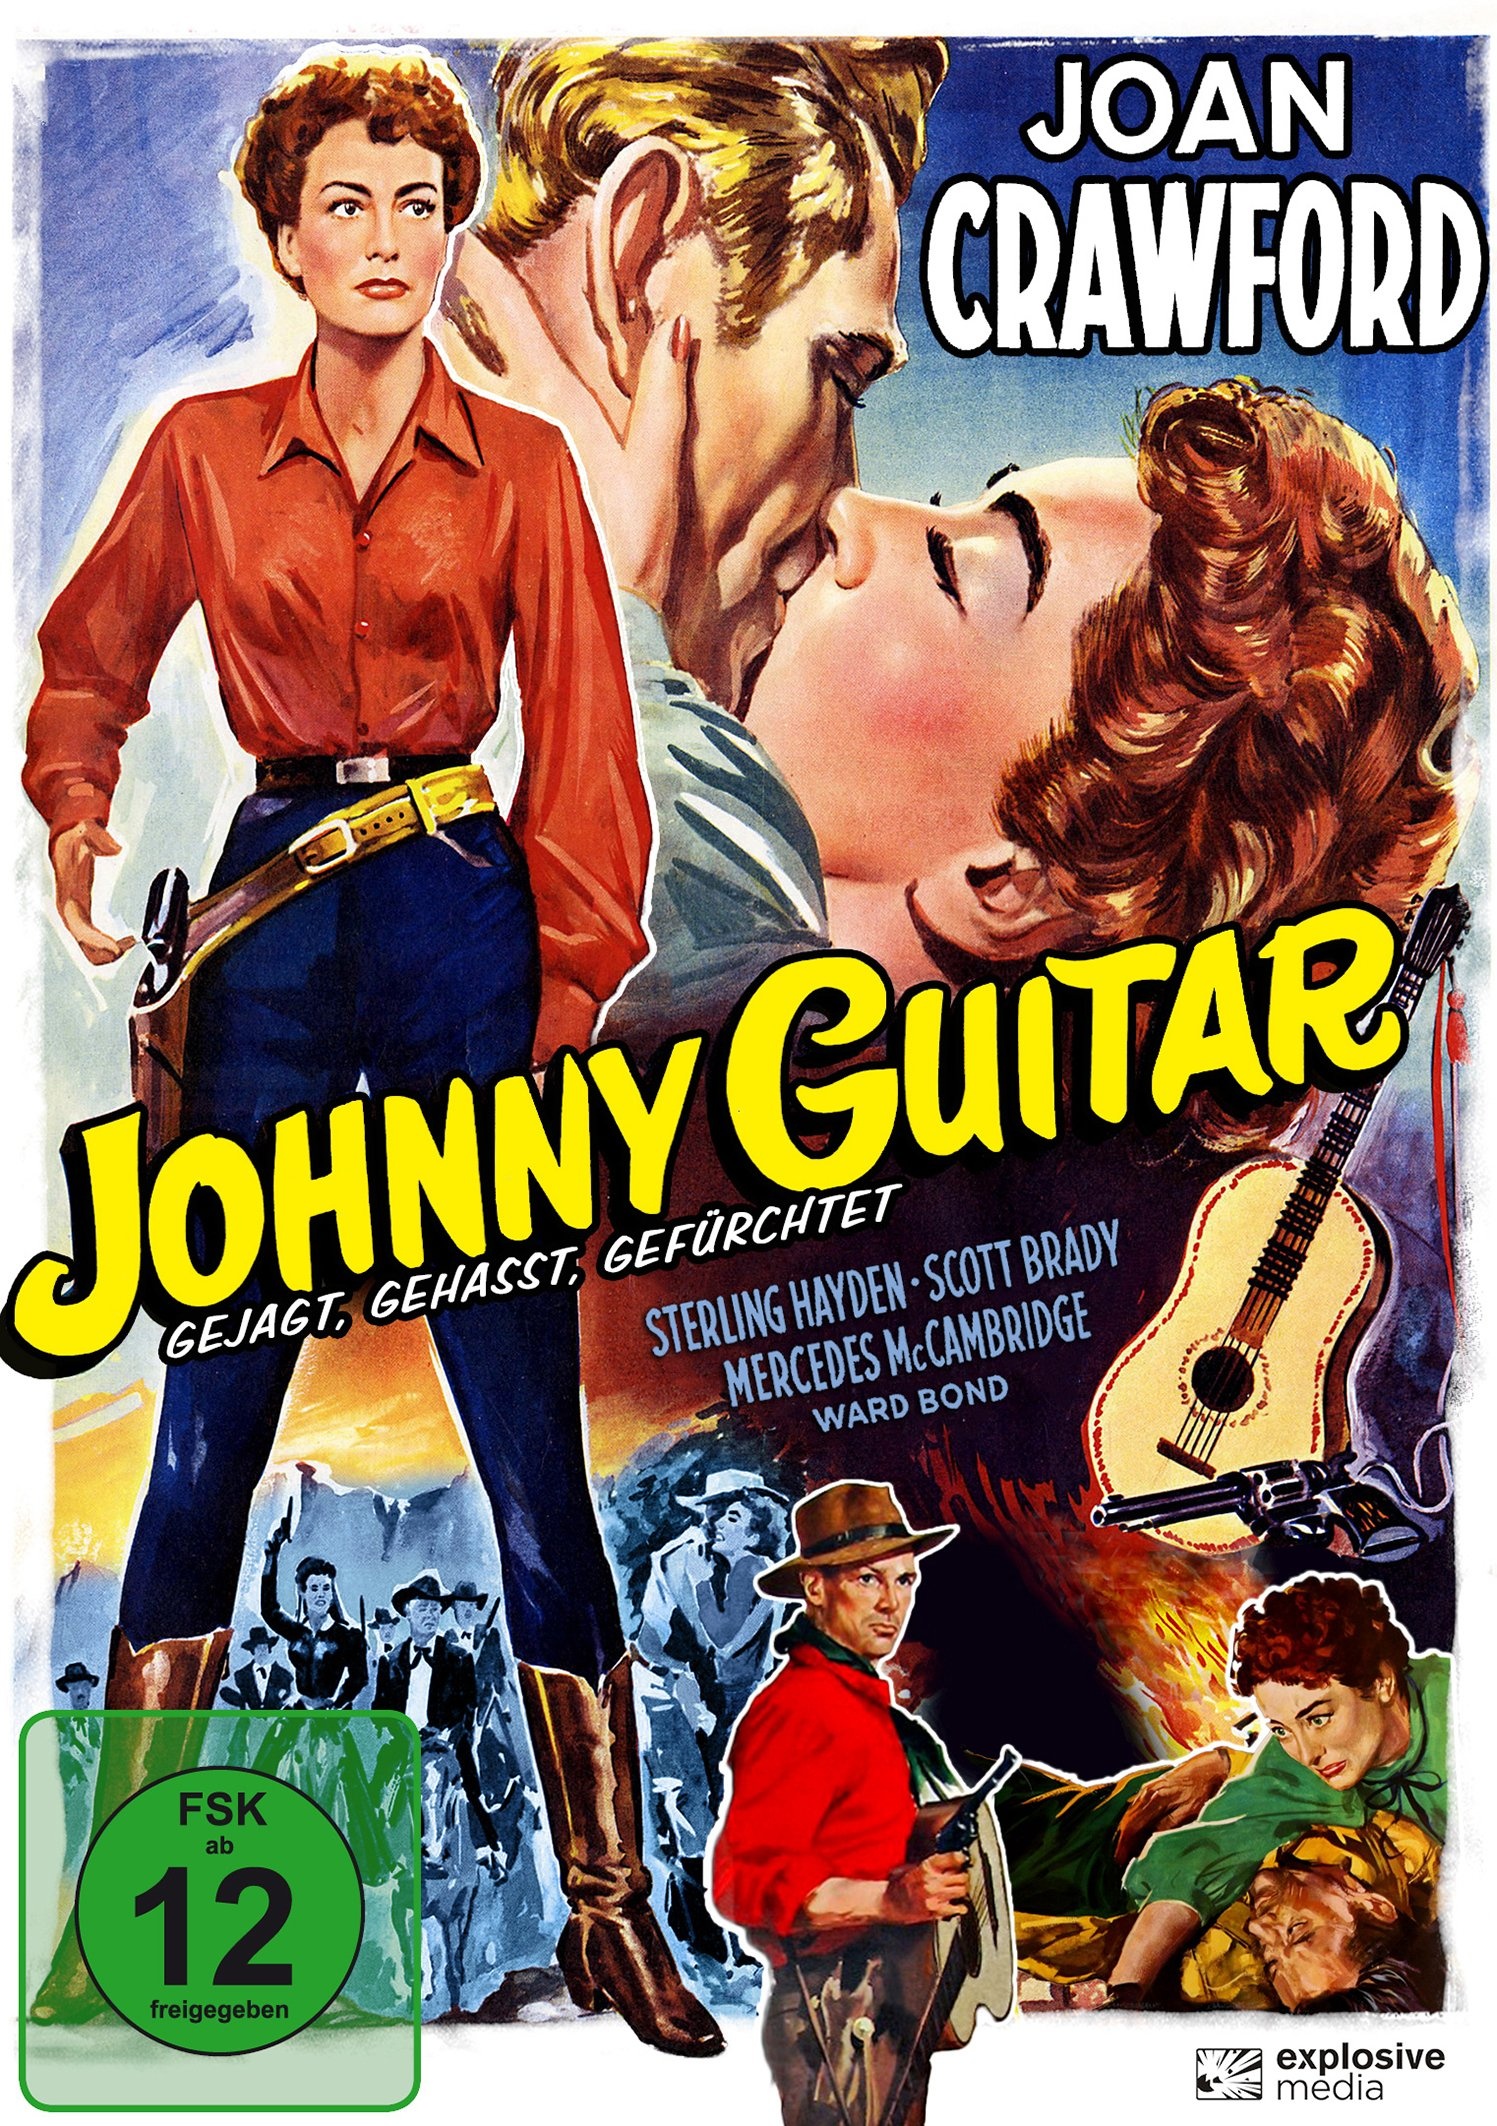 Johnny Guitar - Gehasst, gejagt, gefürchtet (Neu differenzbesteuert)